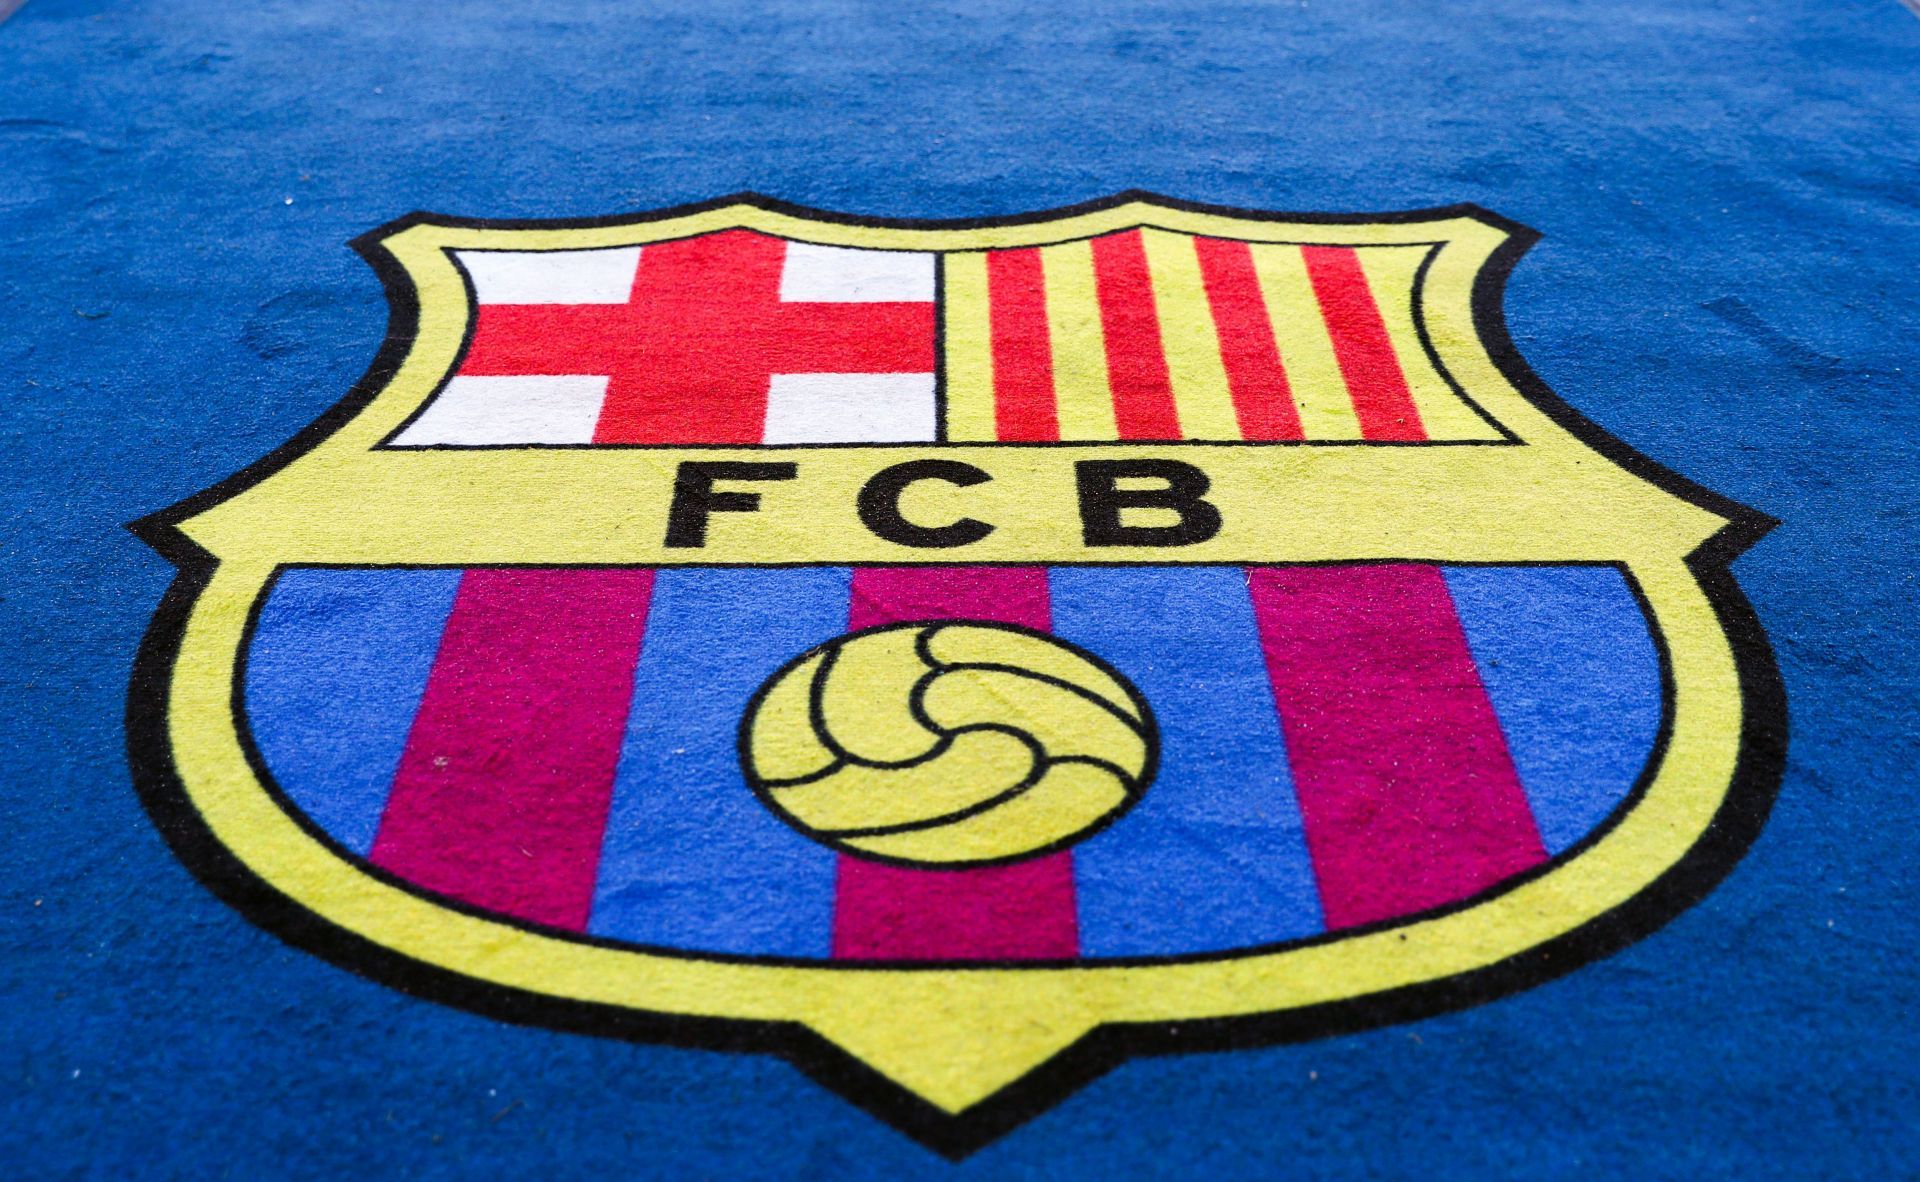 Barcelona badge (via Getty Images)